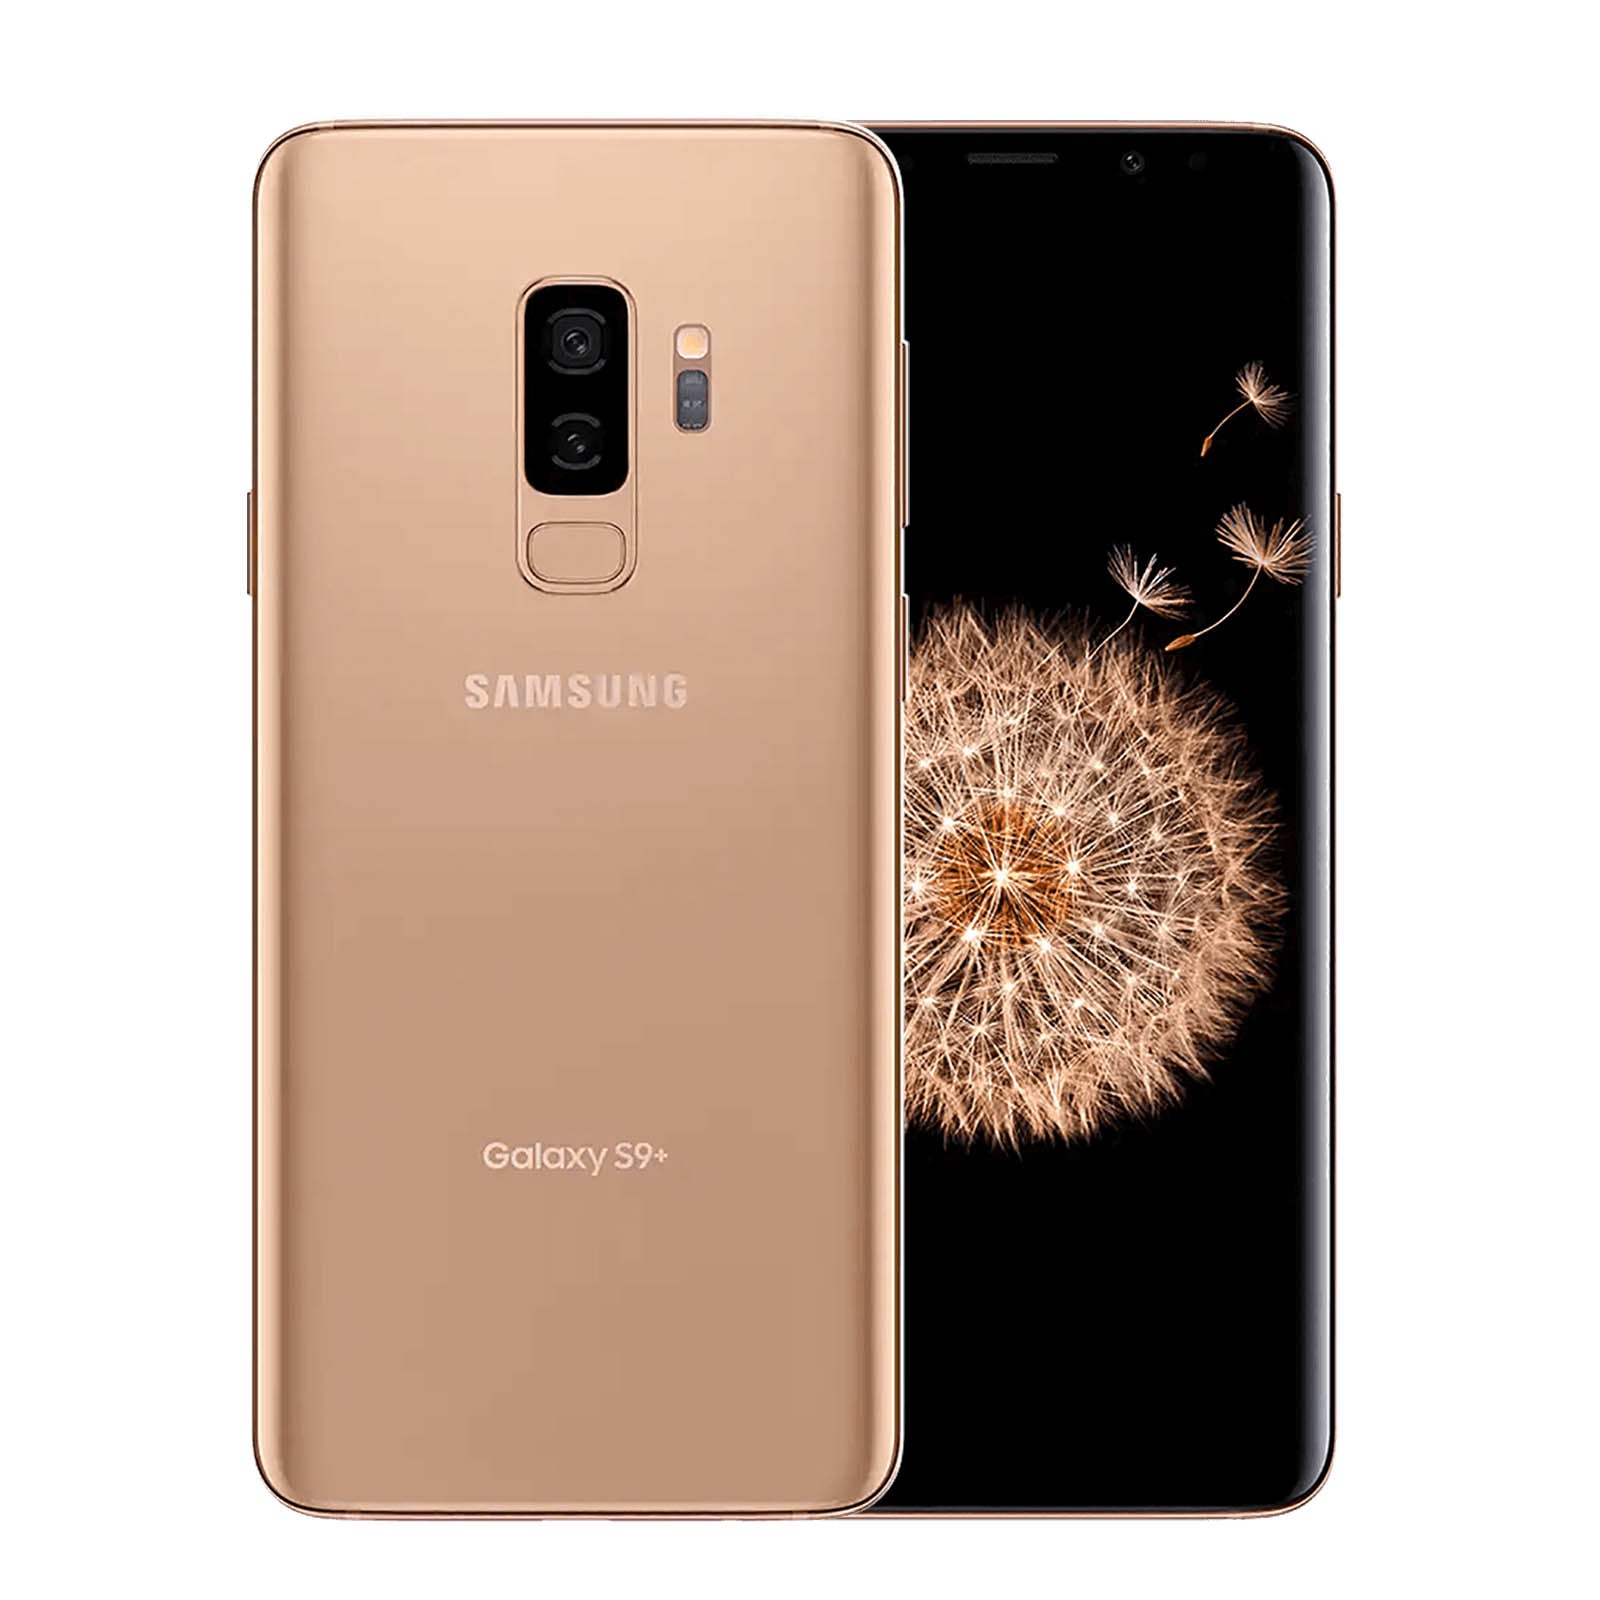 Samsung Galaxy S9 Plus 256GB Gold Very good - Unlocked